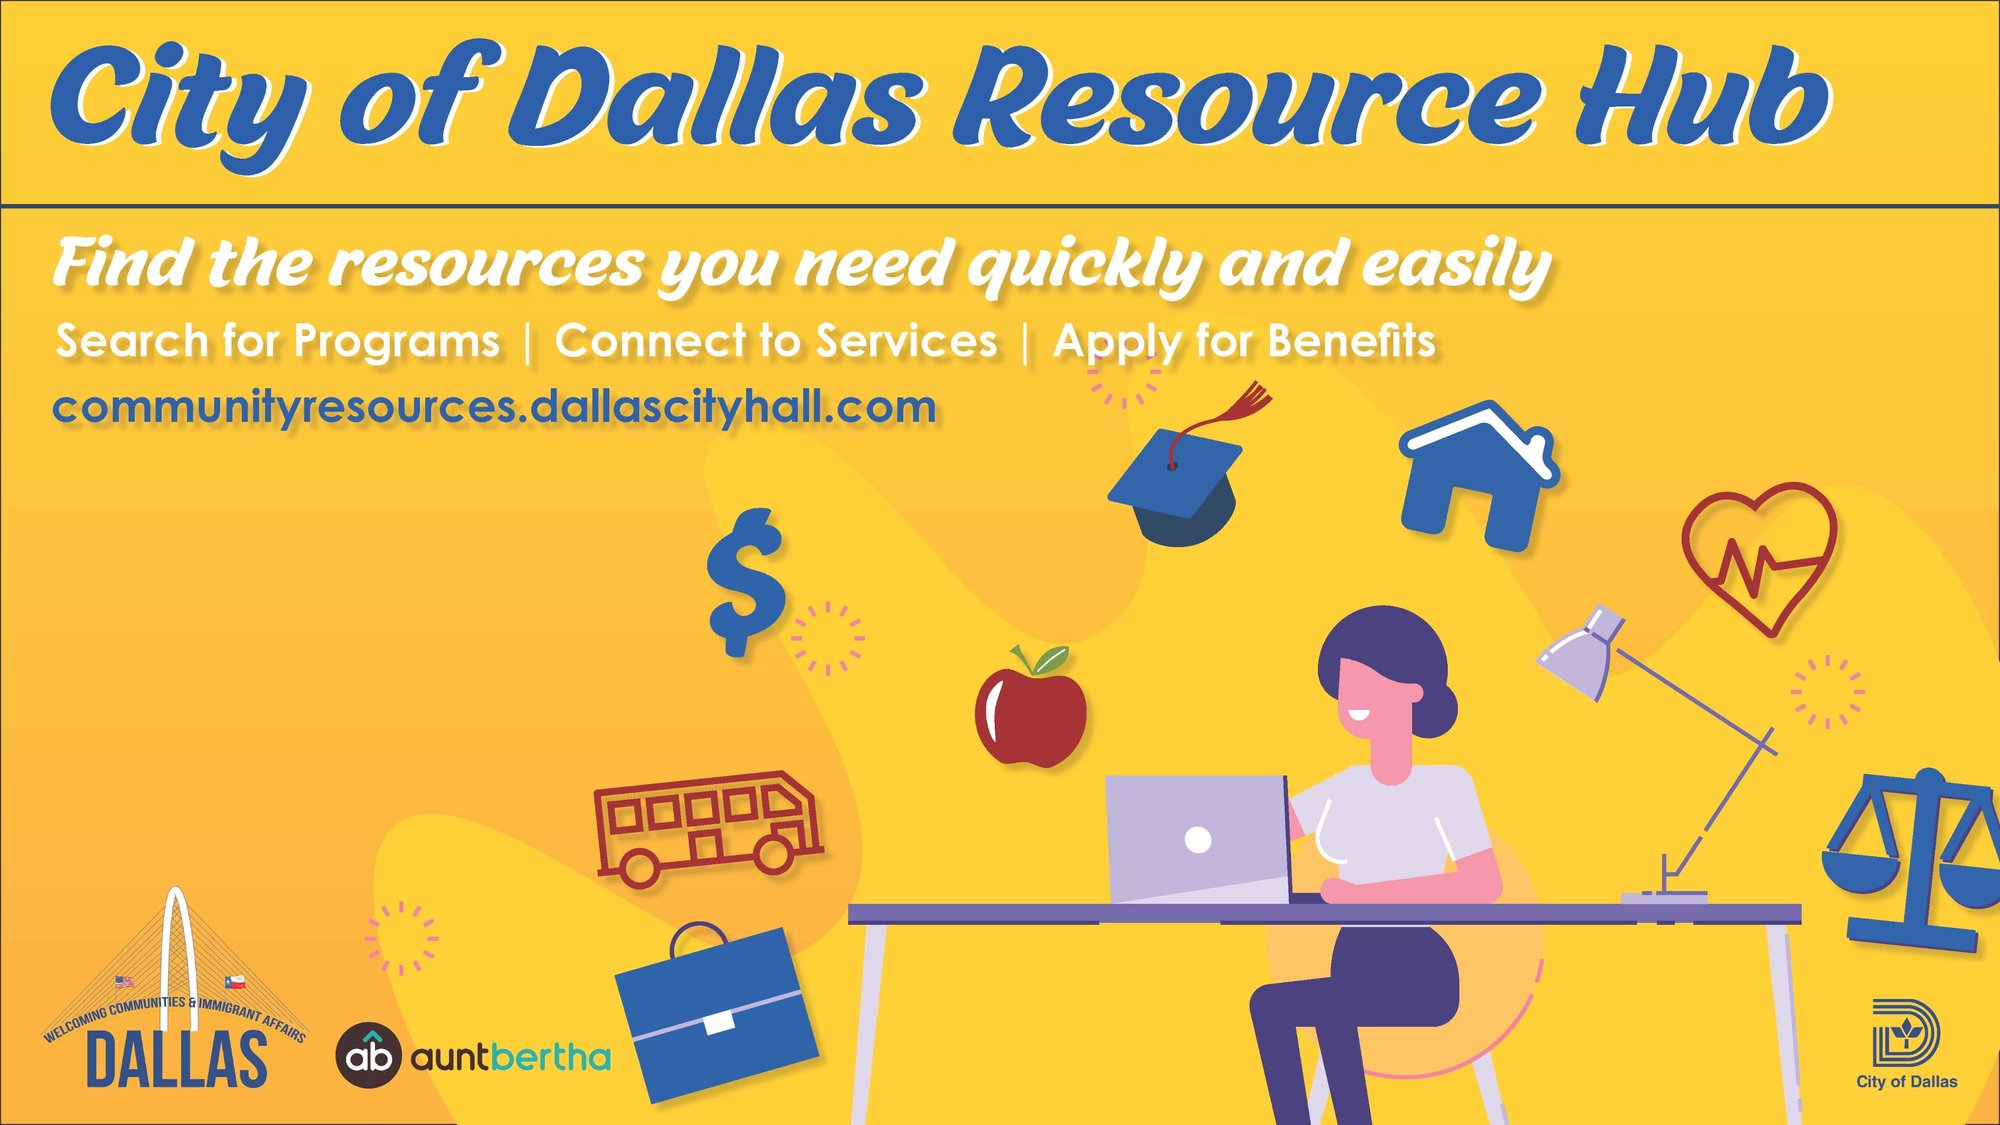 City of Dallas Resources Hub